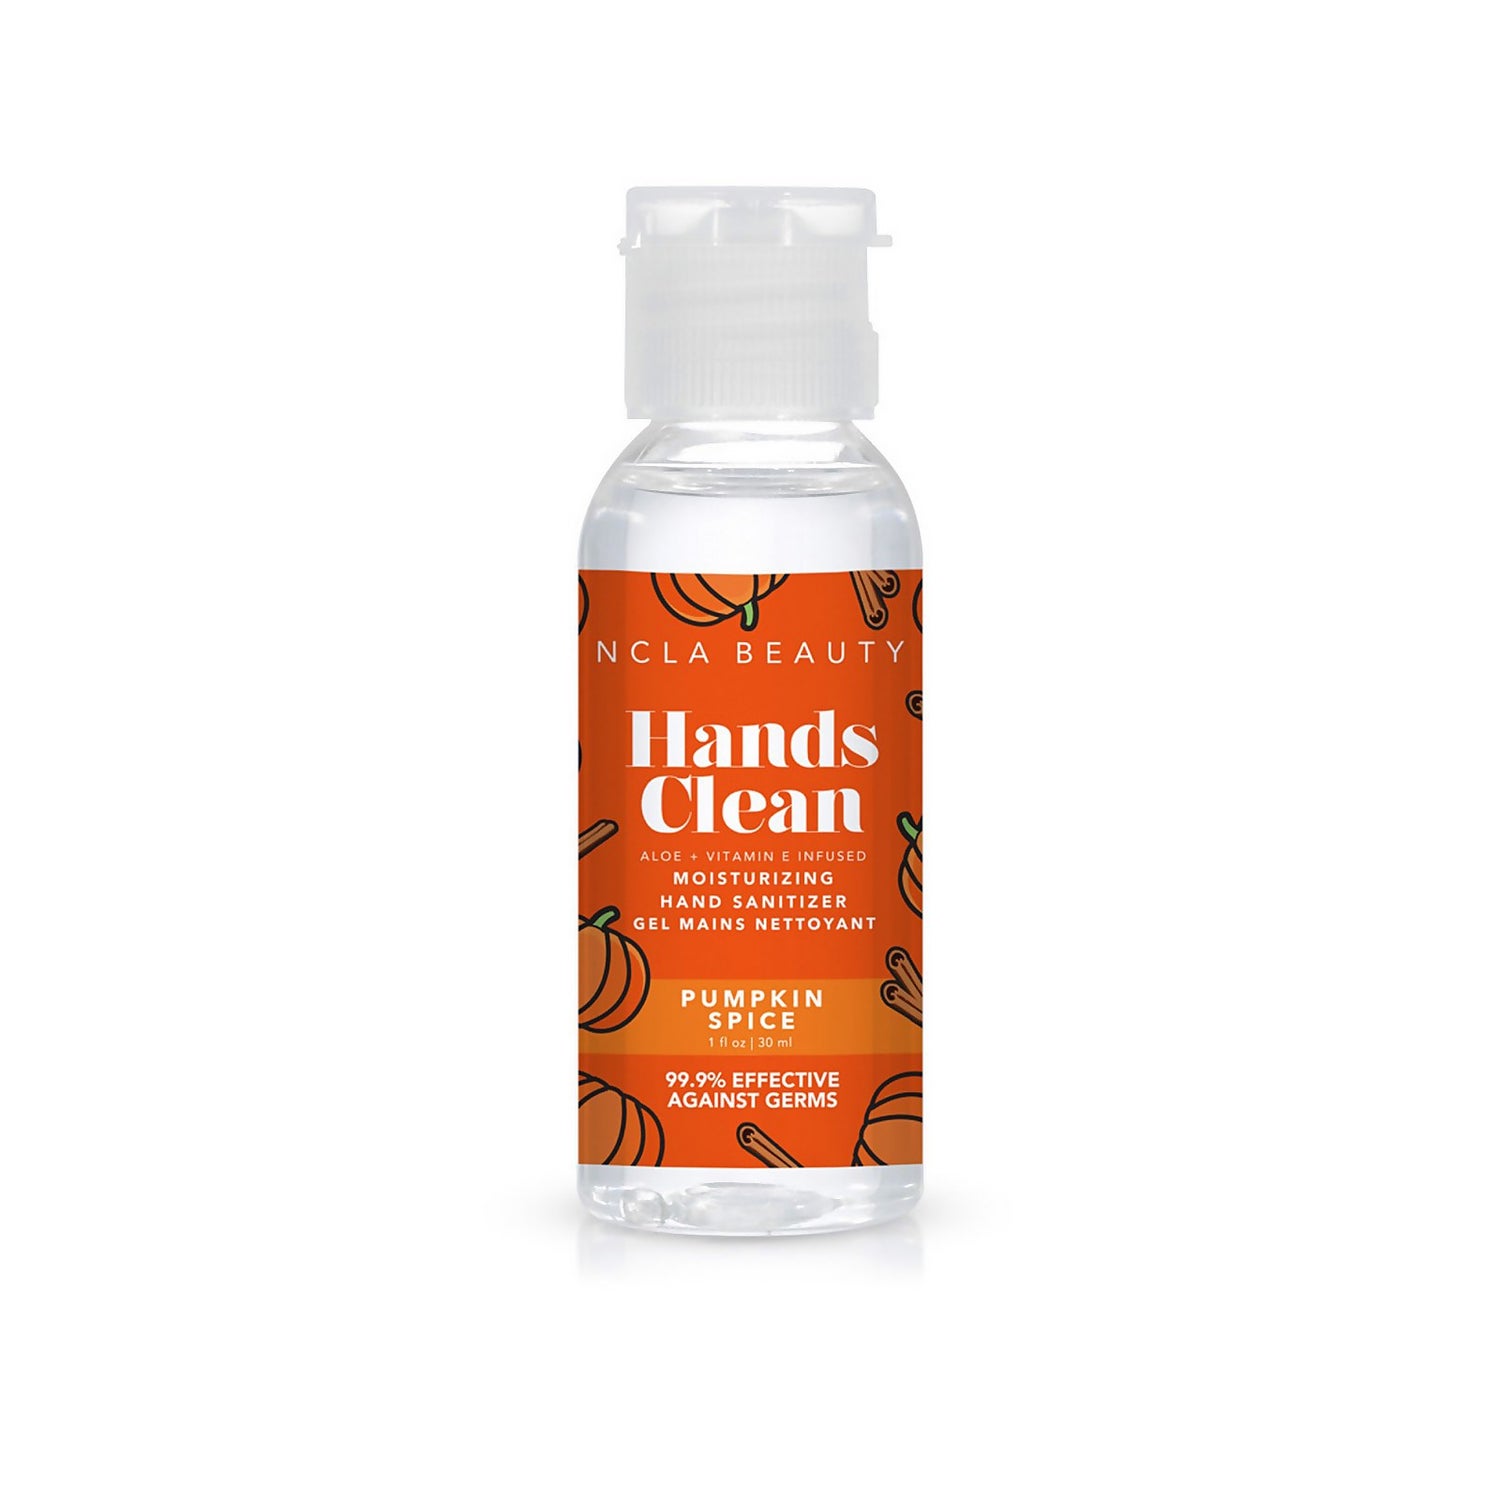 NCLA Beauty Hands Clean Pumpkin Spice Moisturizing Hand Sanitizer